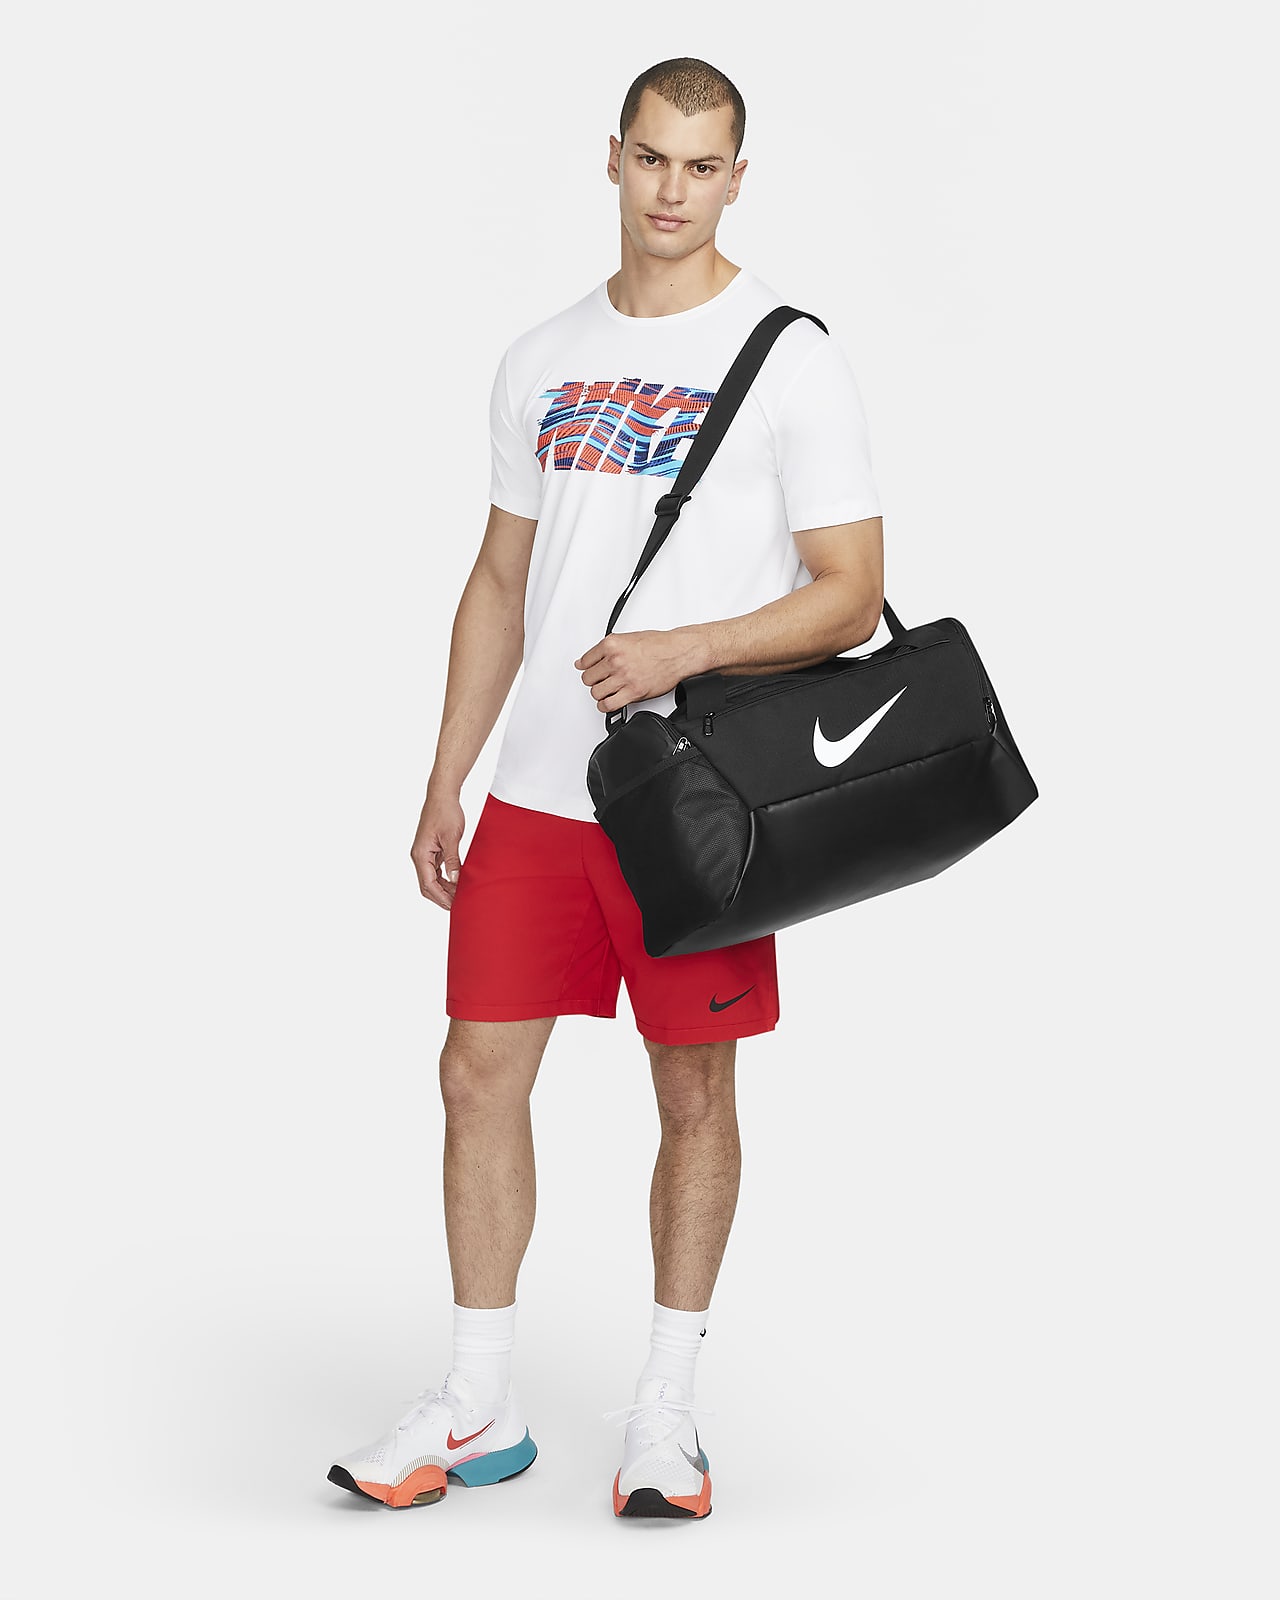 Nike Brasilia 9.5 Training Duffel Bag (Small, 41L). Nike.com